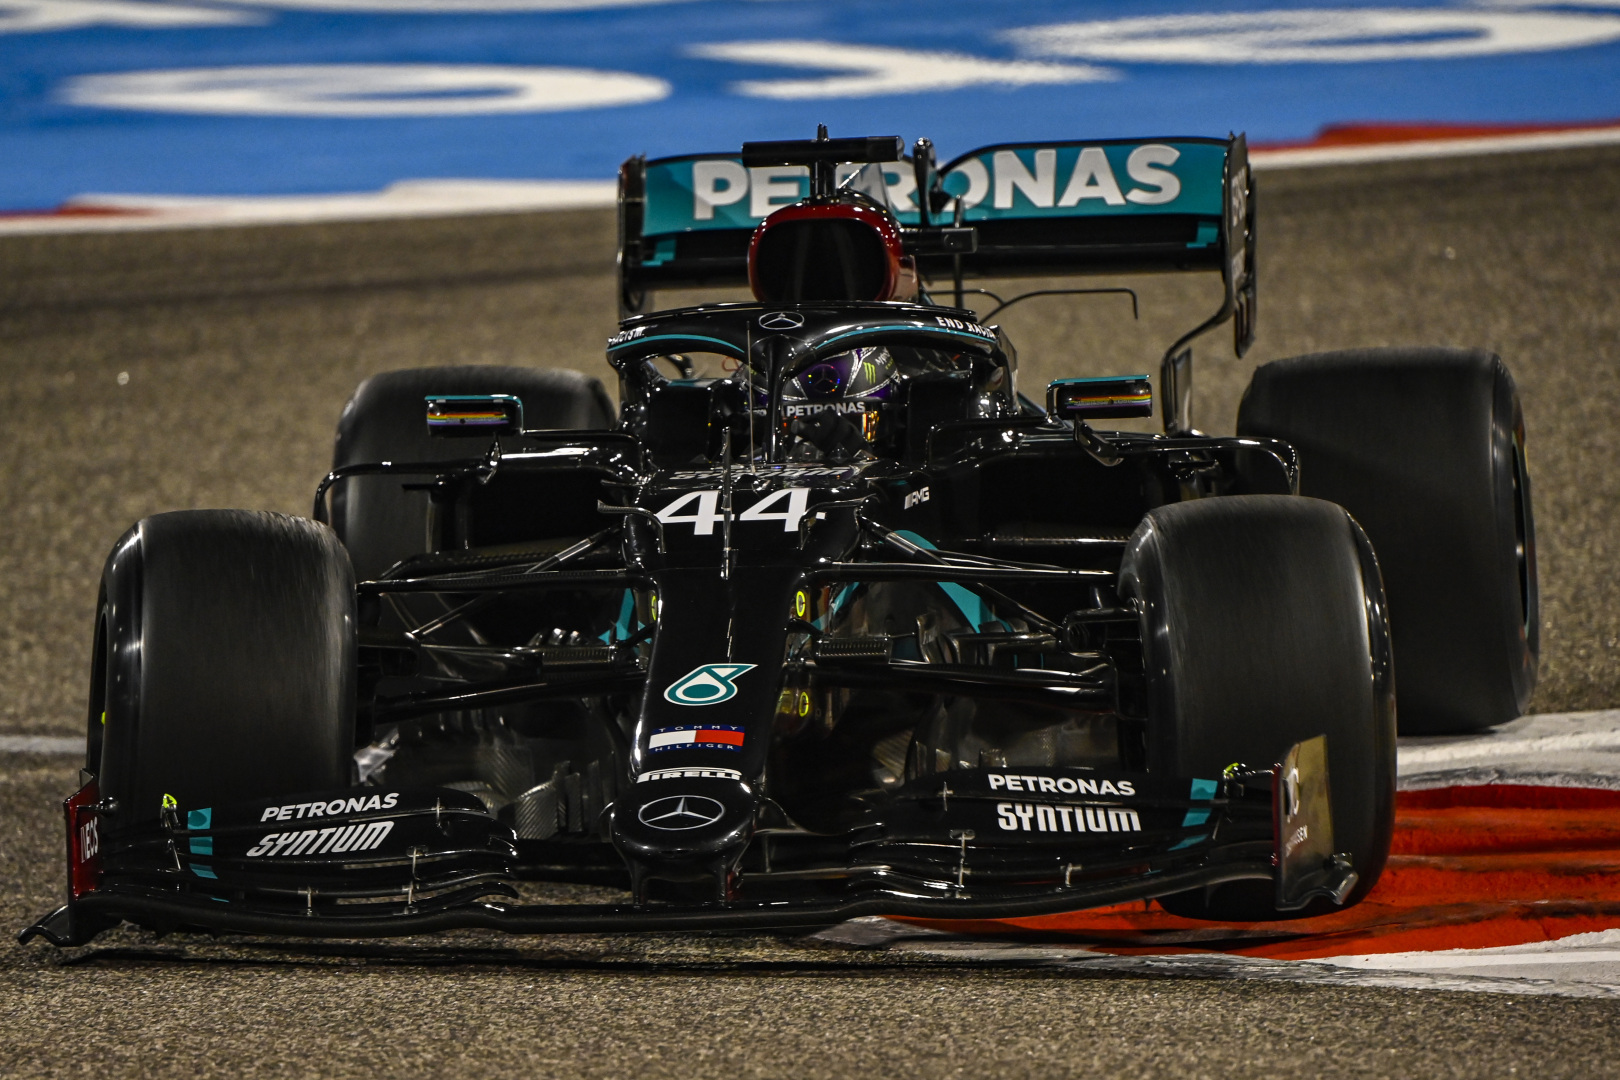 2020 Bahrain Grand Prix, Friday - Lewis Hamilton (image courtesy Mercedes-AMG Petronas)